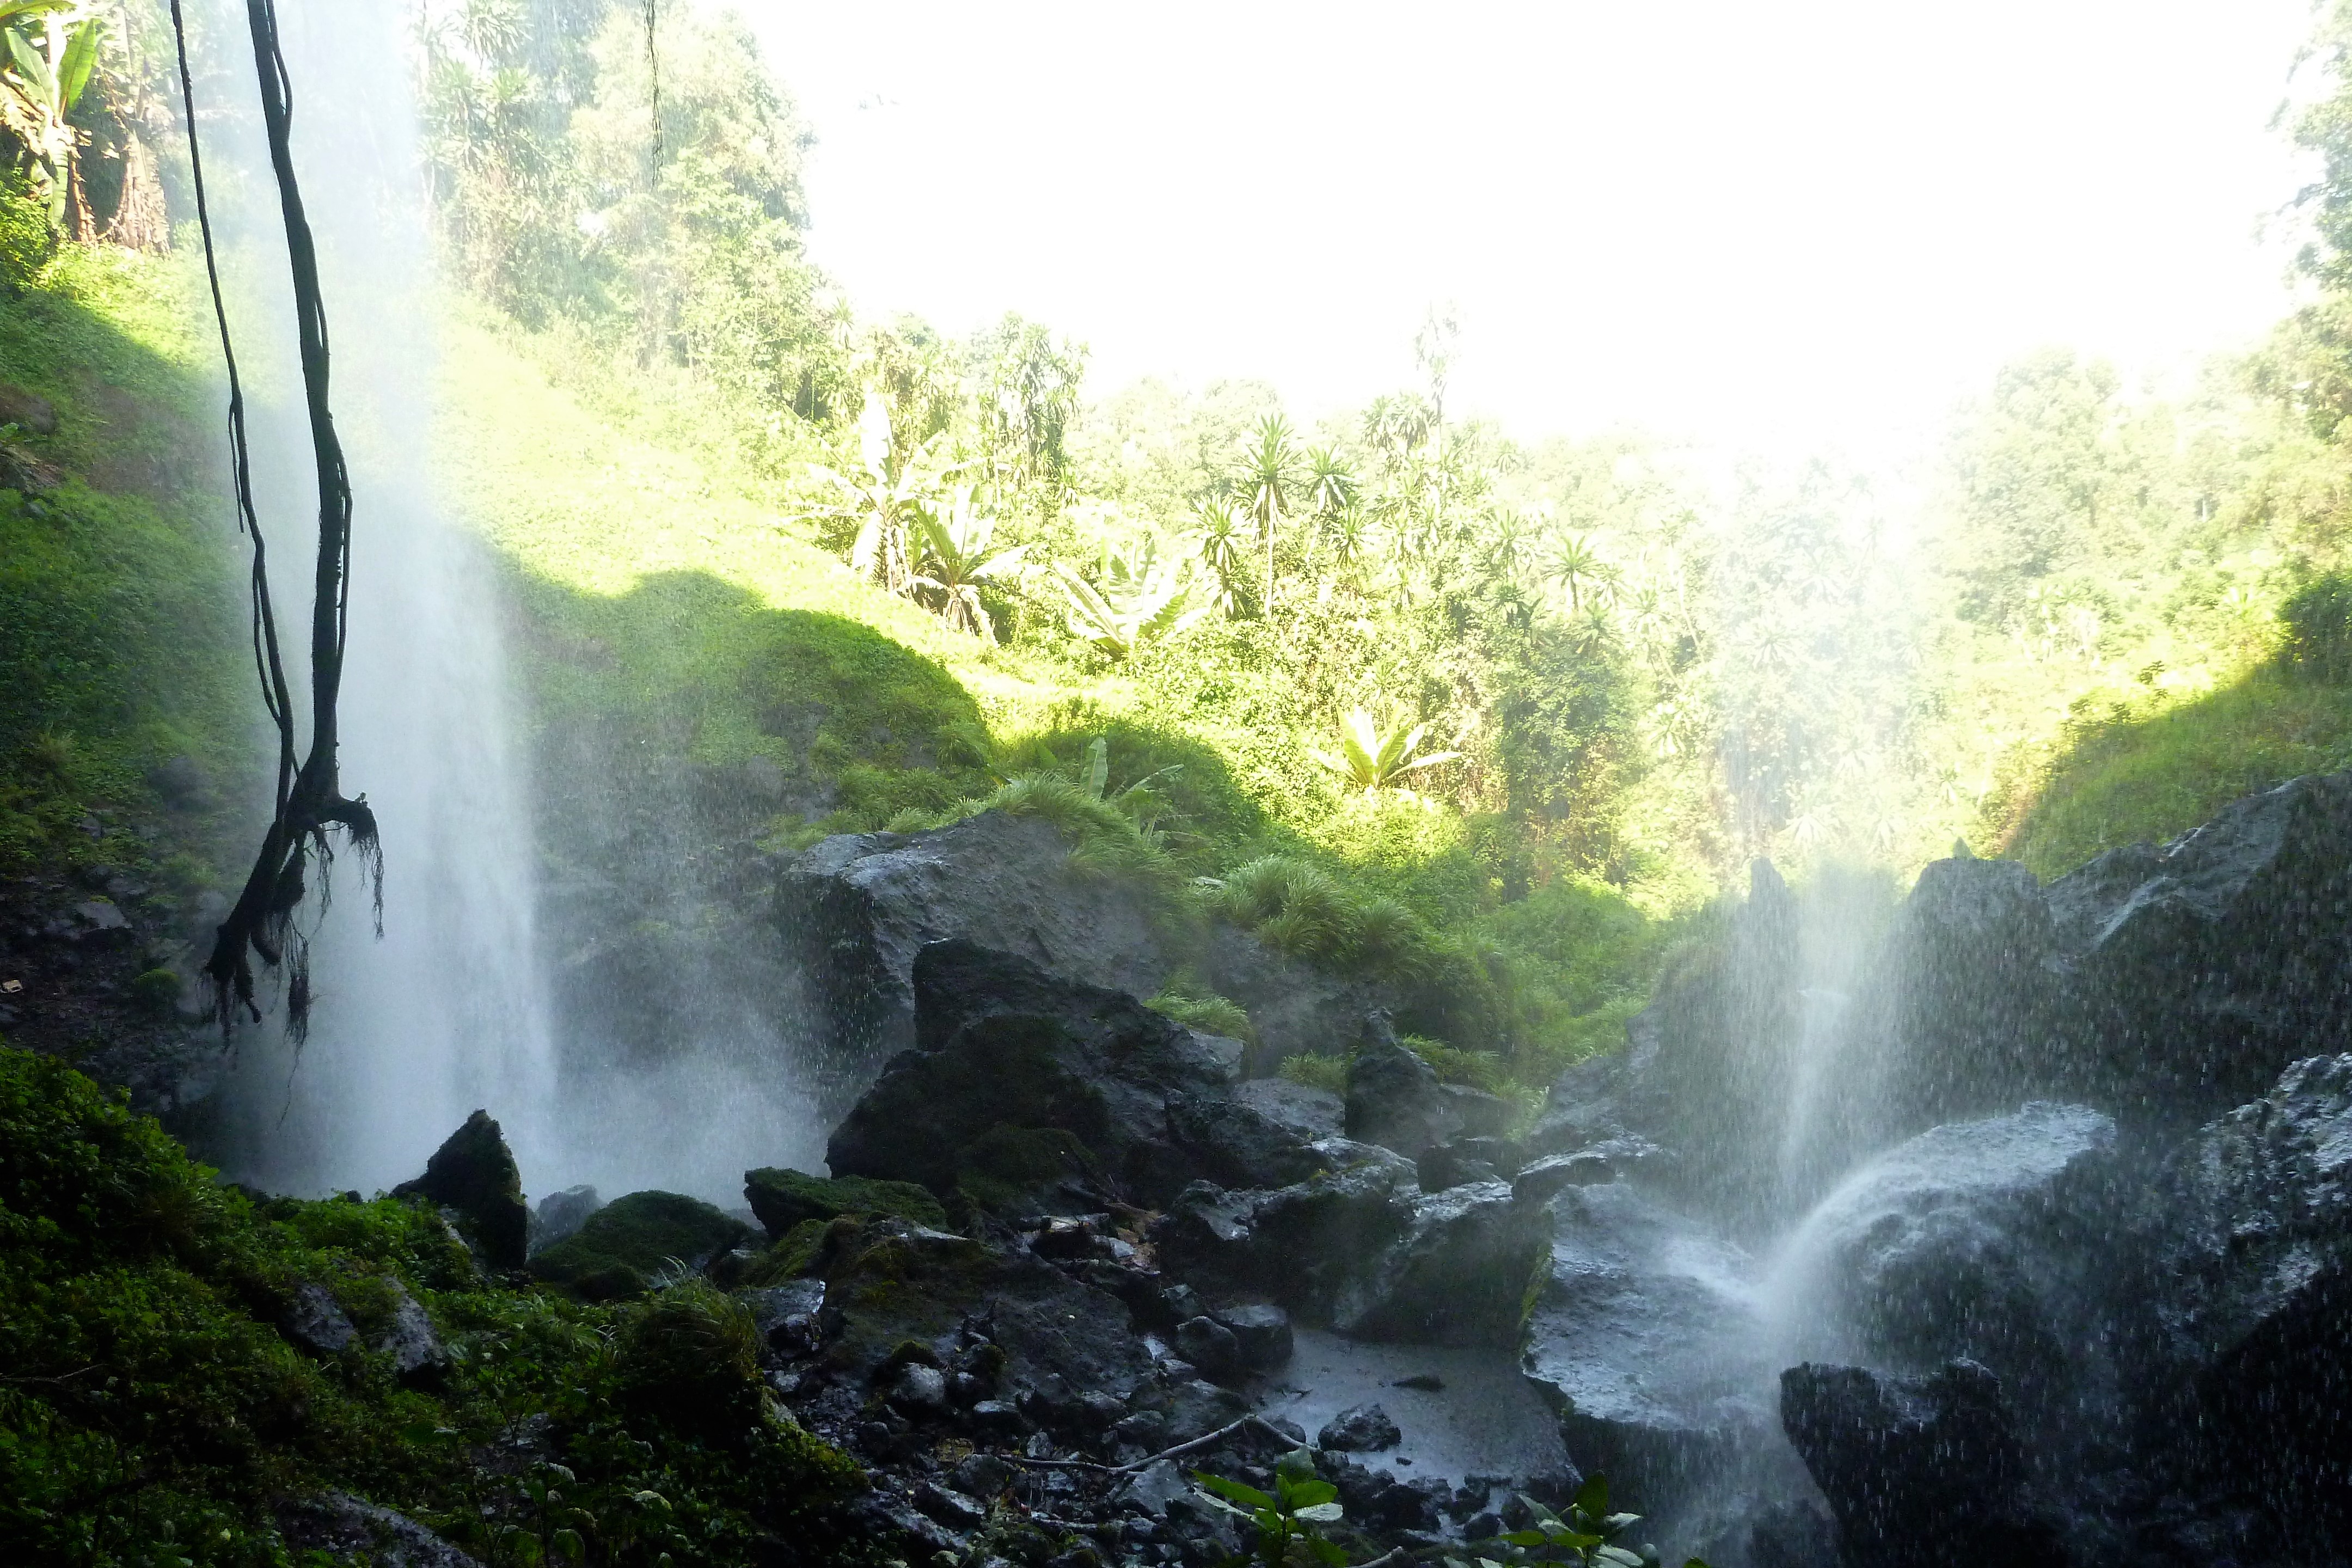 Sipi Falls trails on Mount Elgon - 11 Days Uganda safari, Pian Upe wildlife and cultural tour | North-East waterfalls adventure